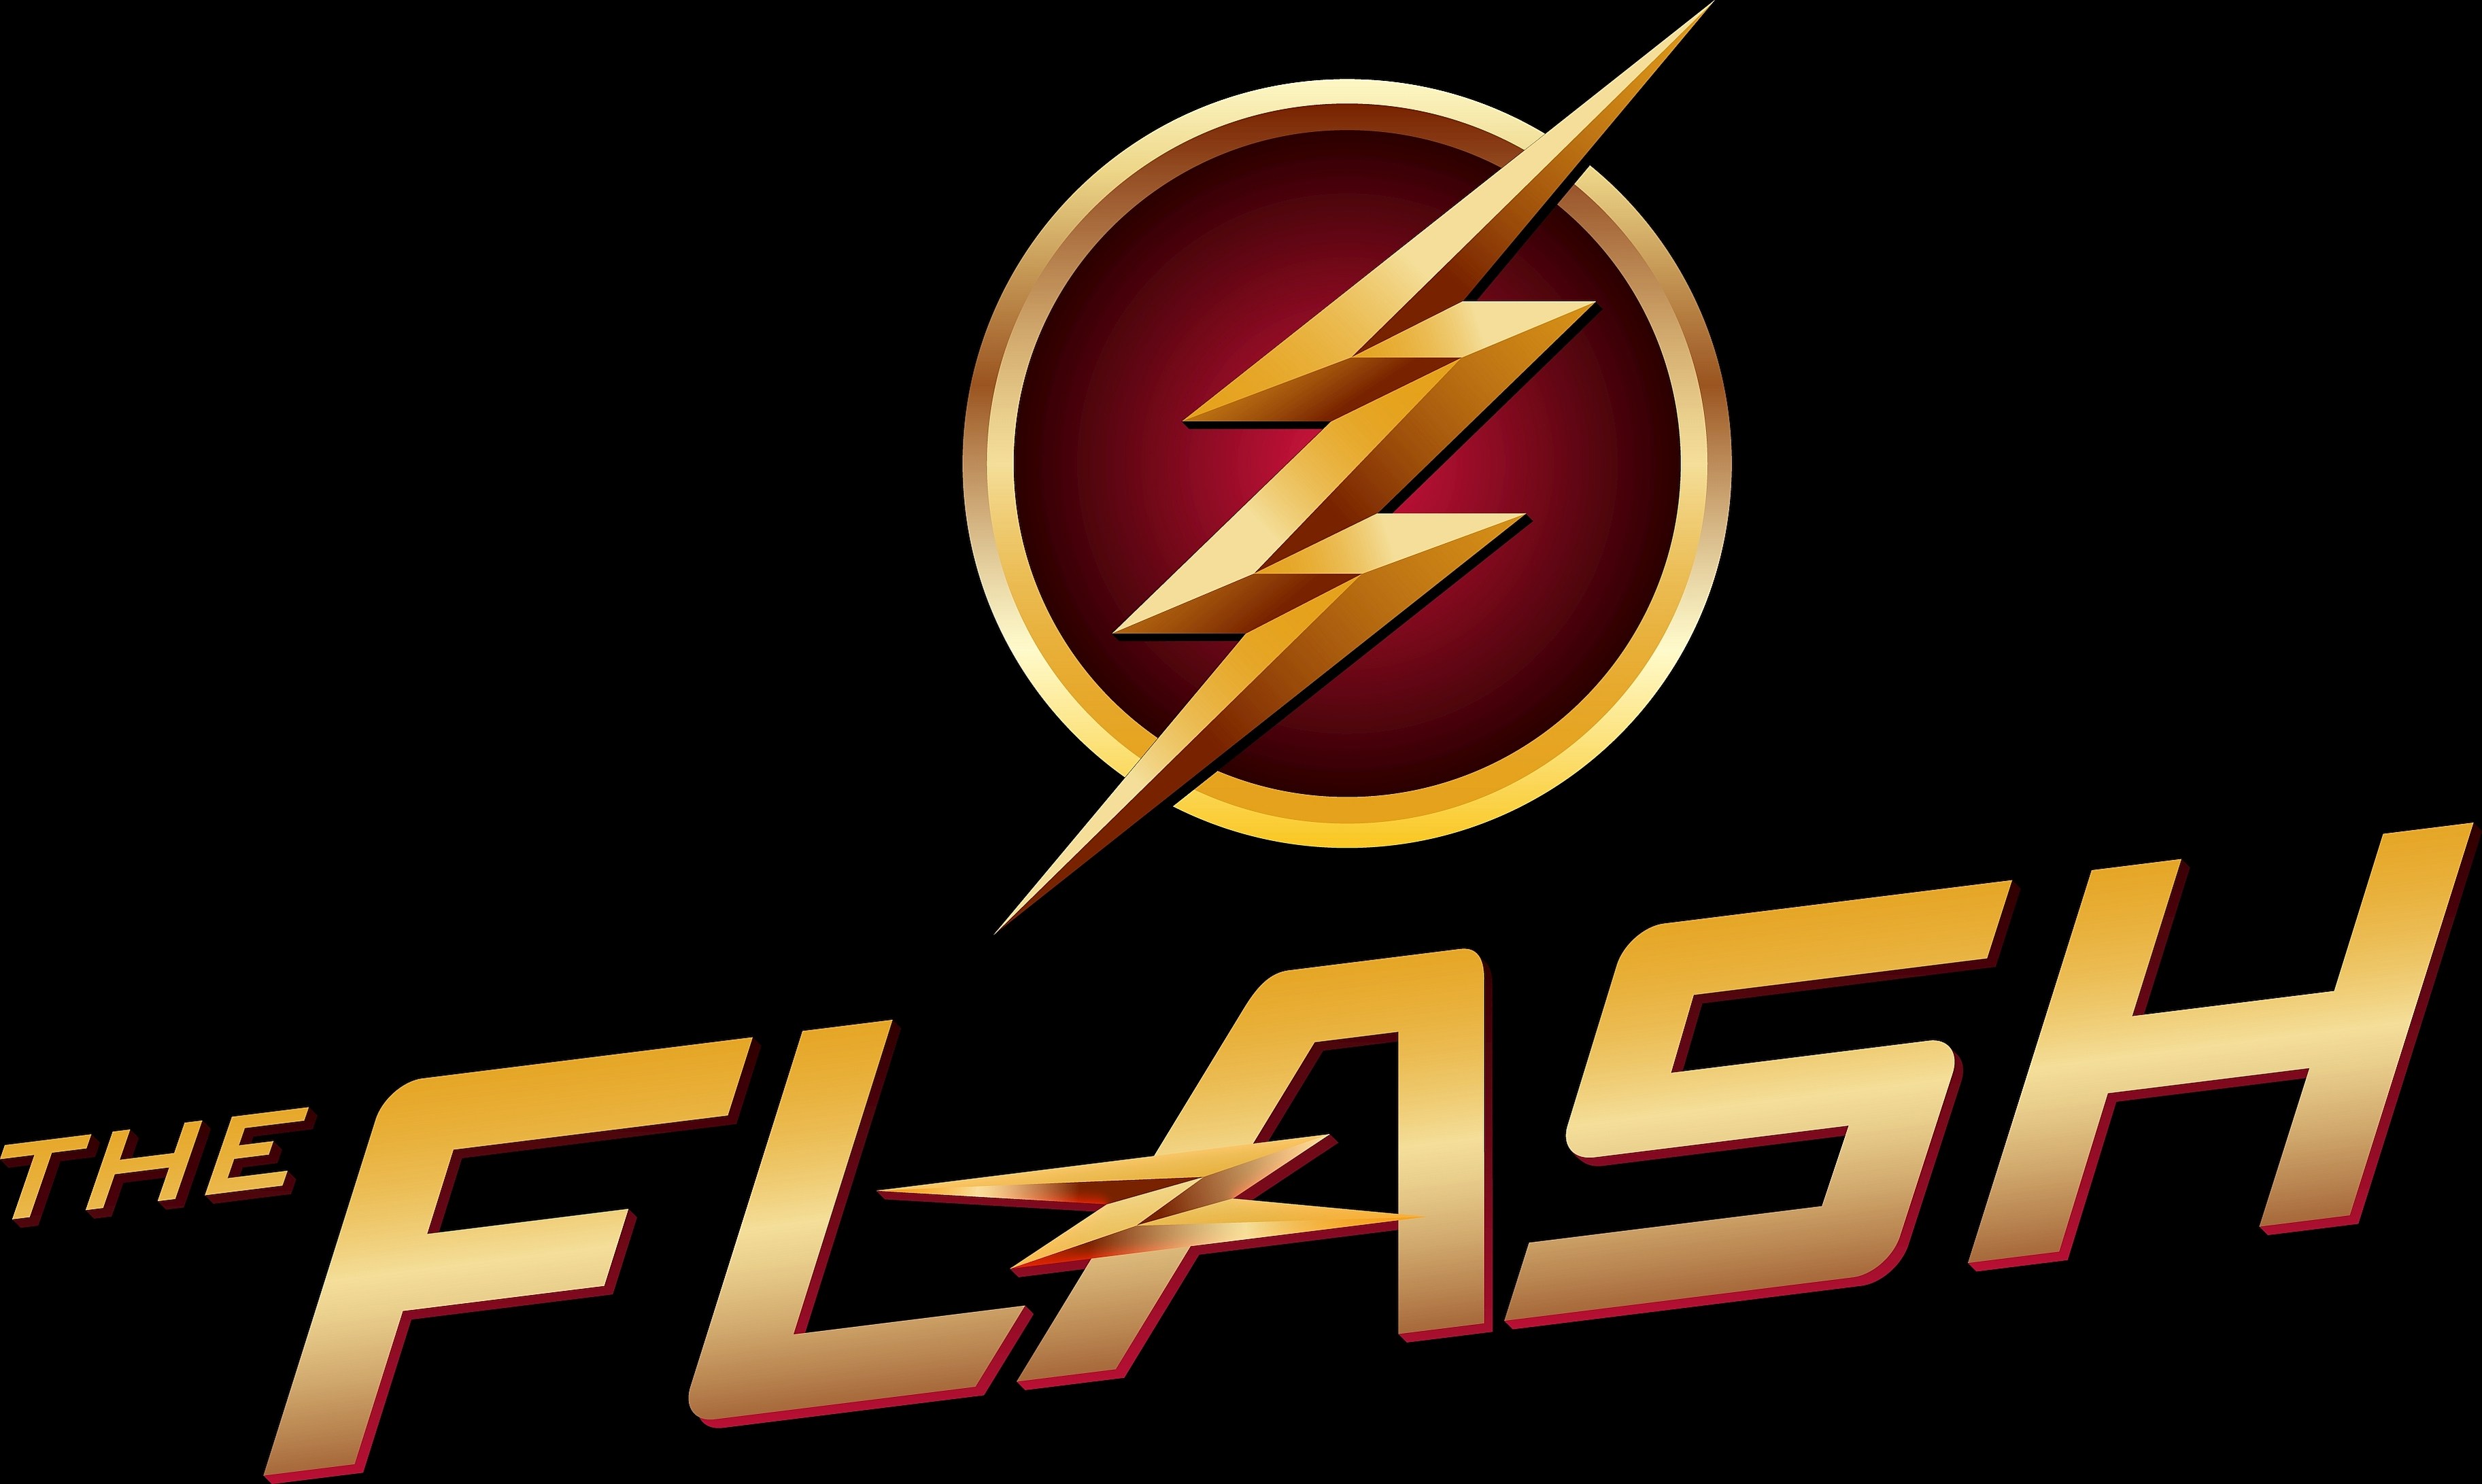 壁纸 flash TV show logo - Fonwall 上的免费图片